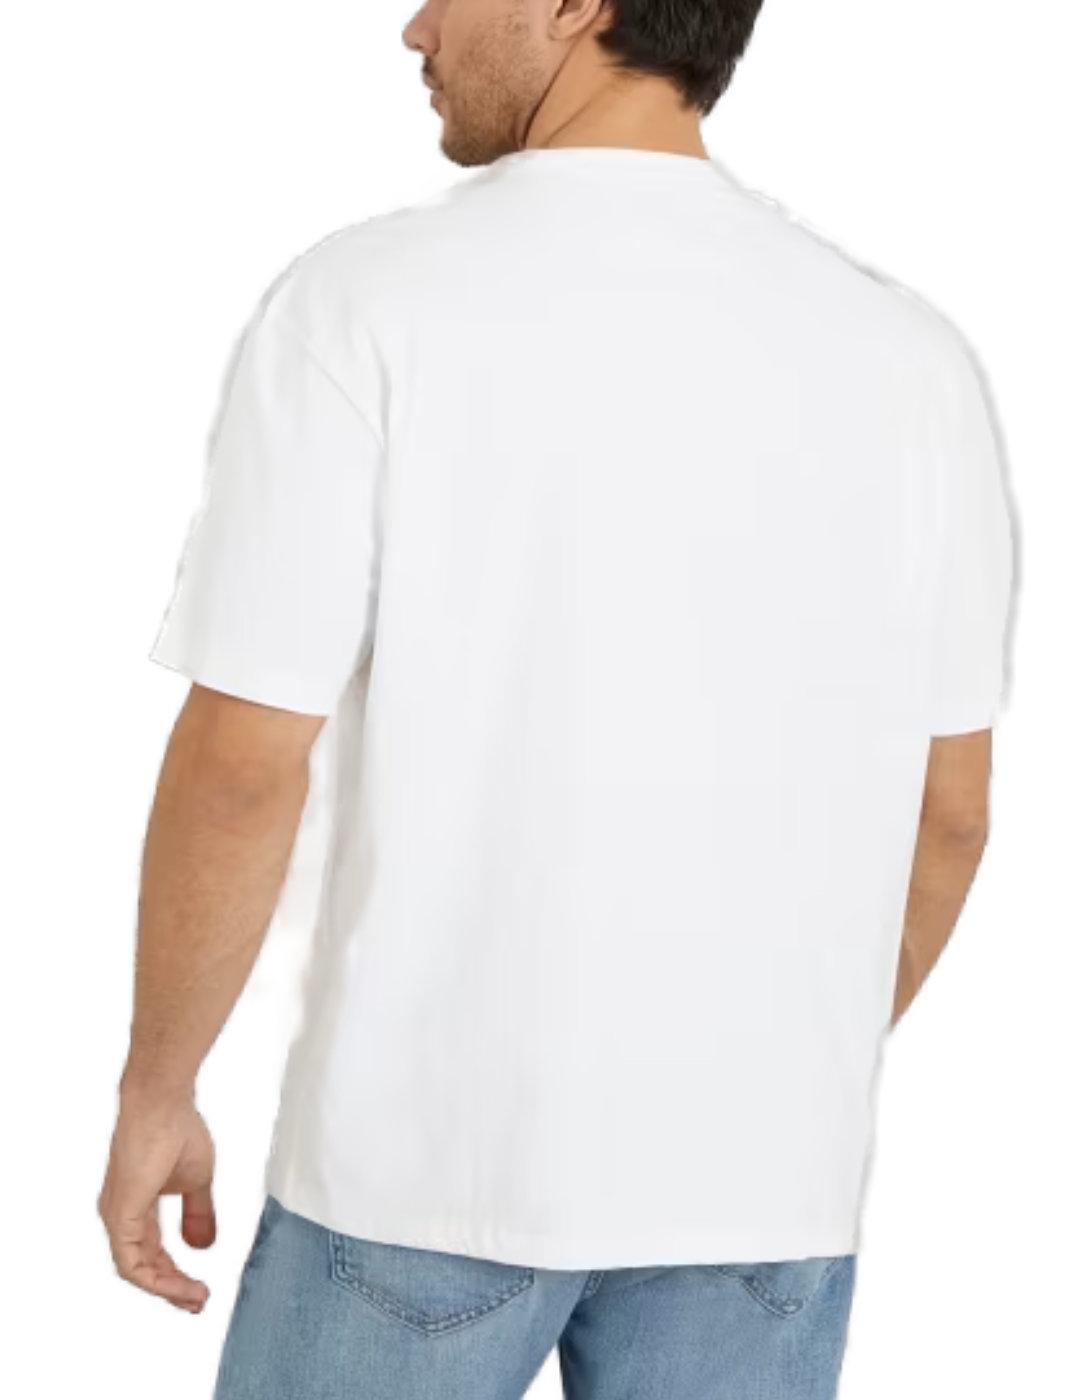 Camiseta Guess First blanca estampada manga corta de hombre